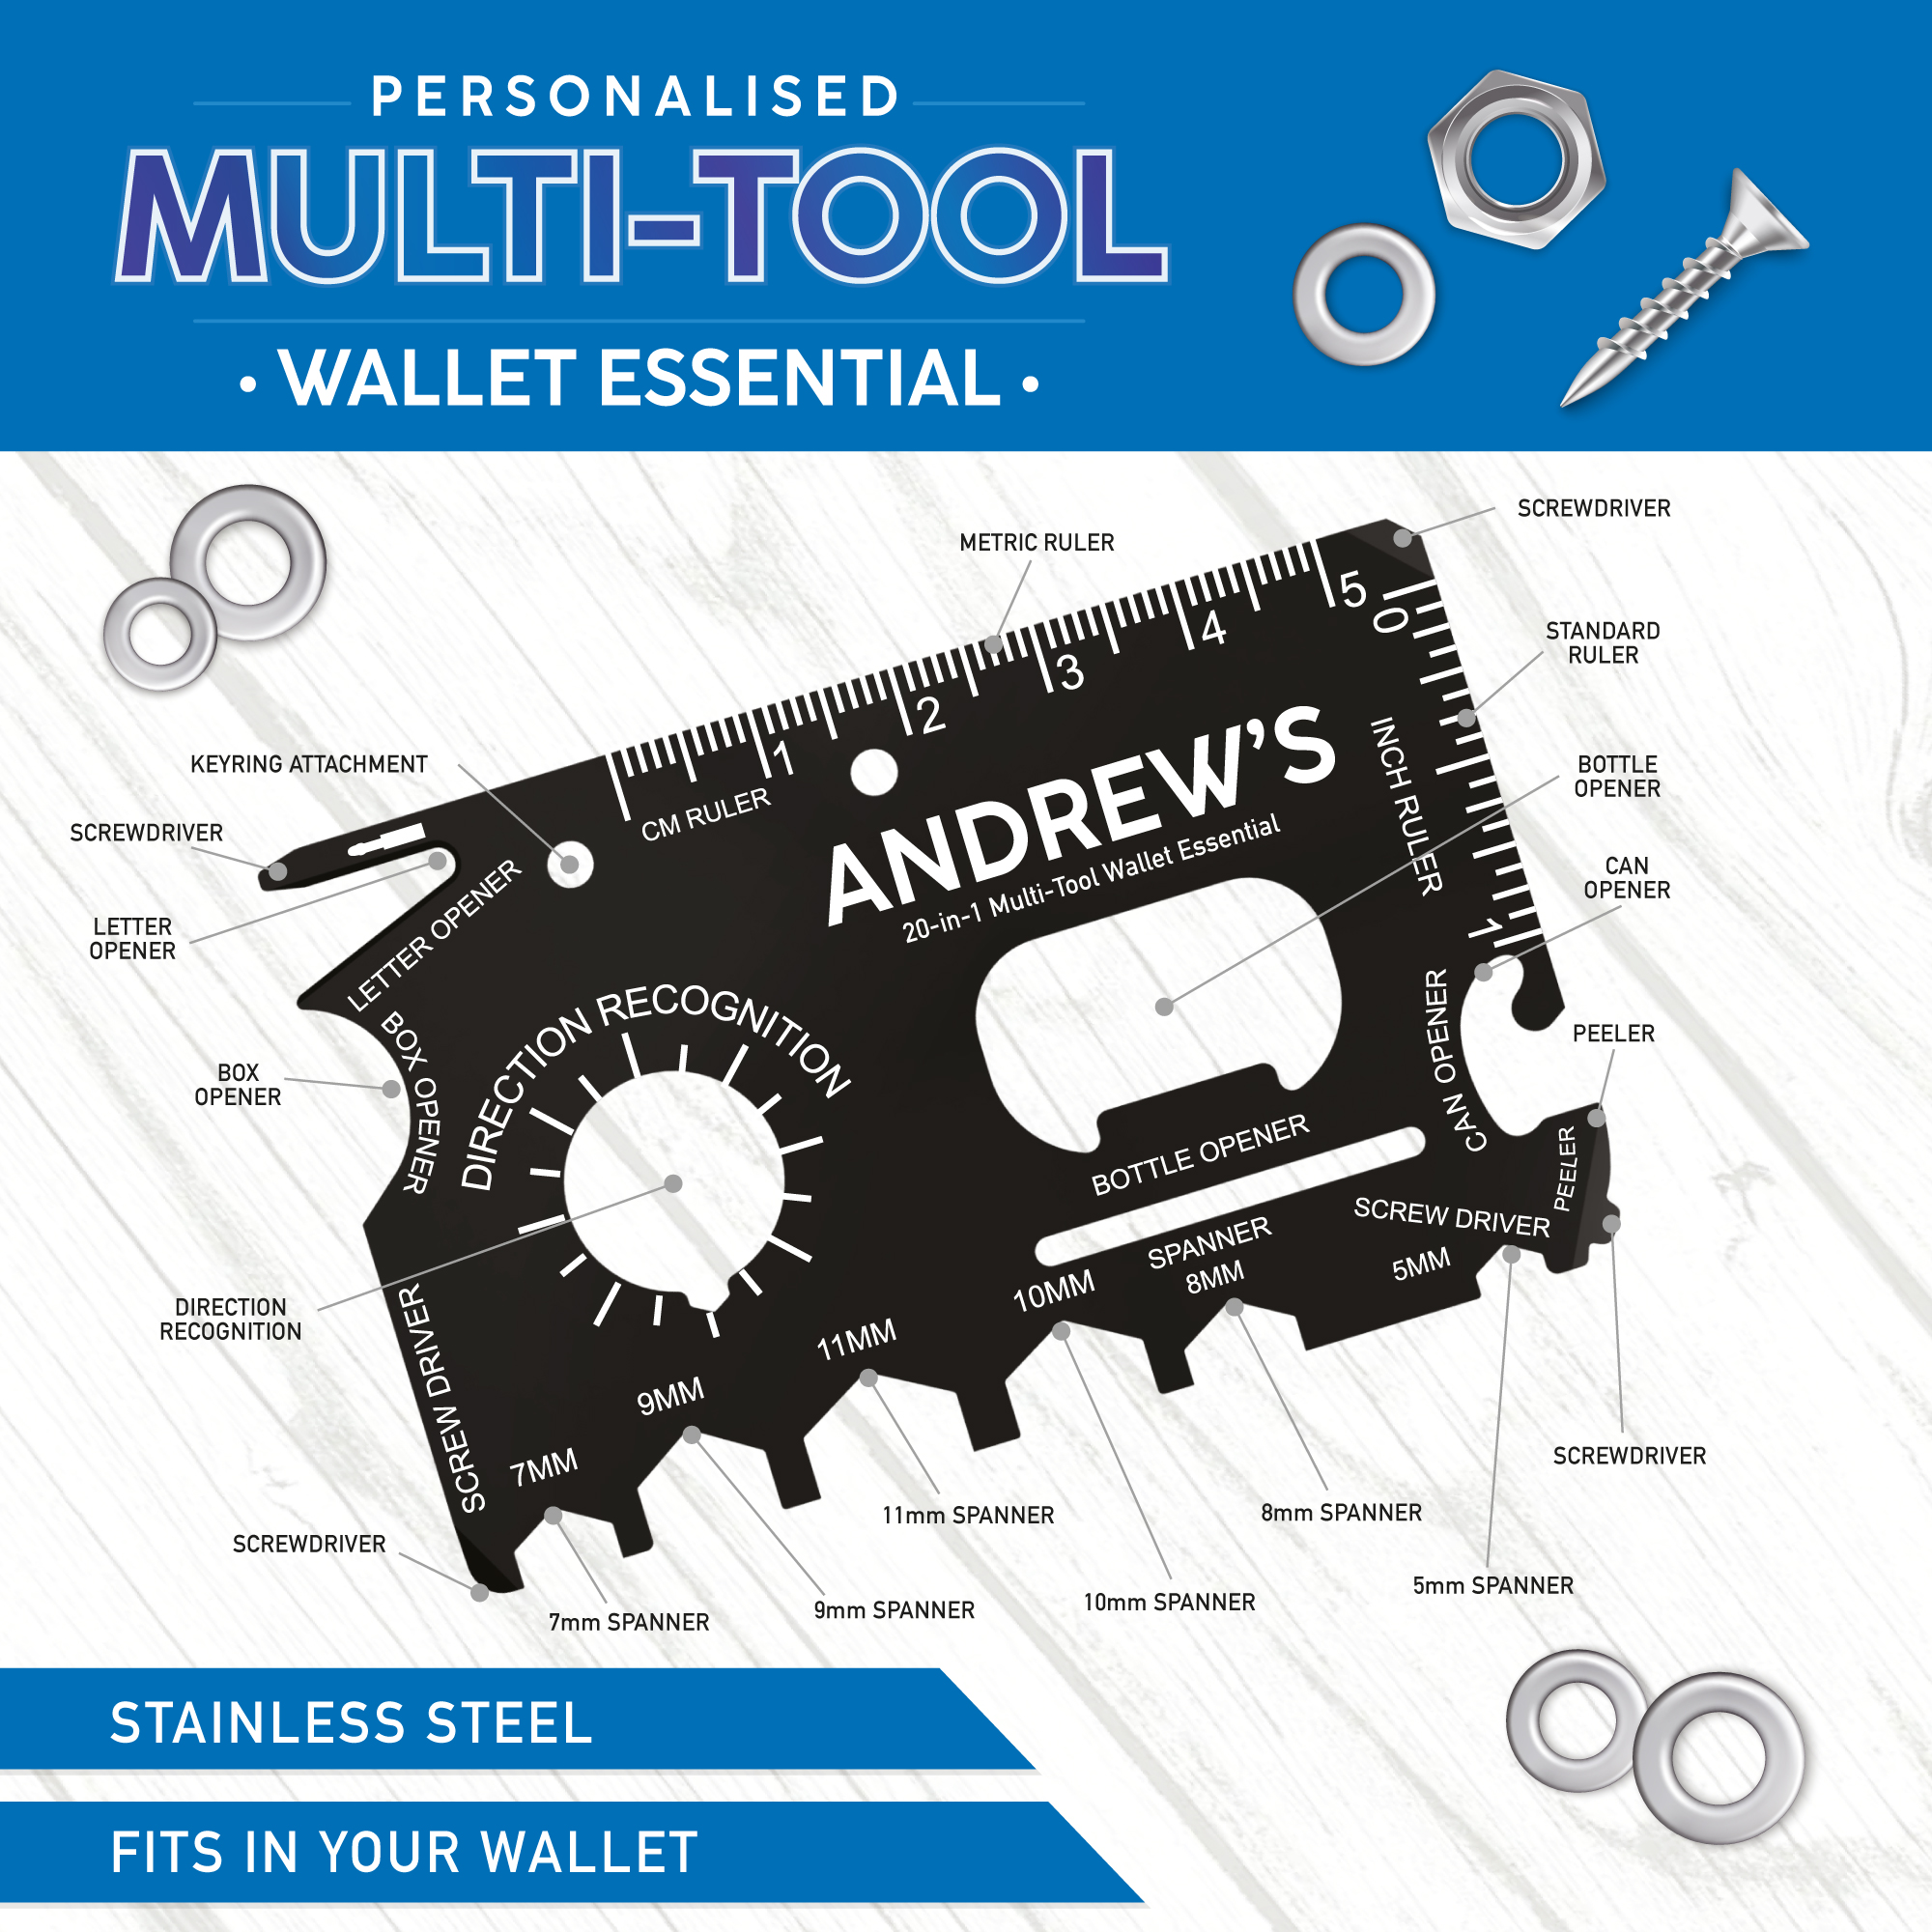 Personalised wallet essential multitool from global journey